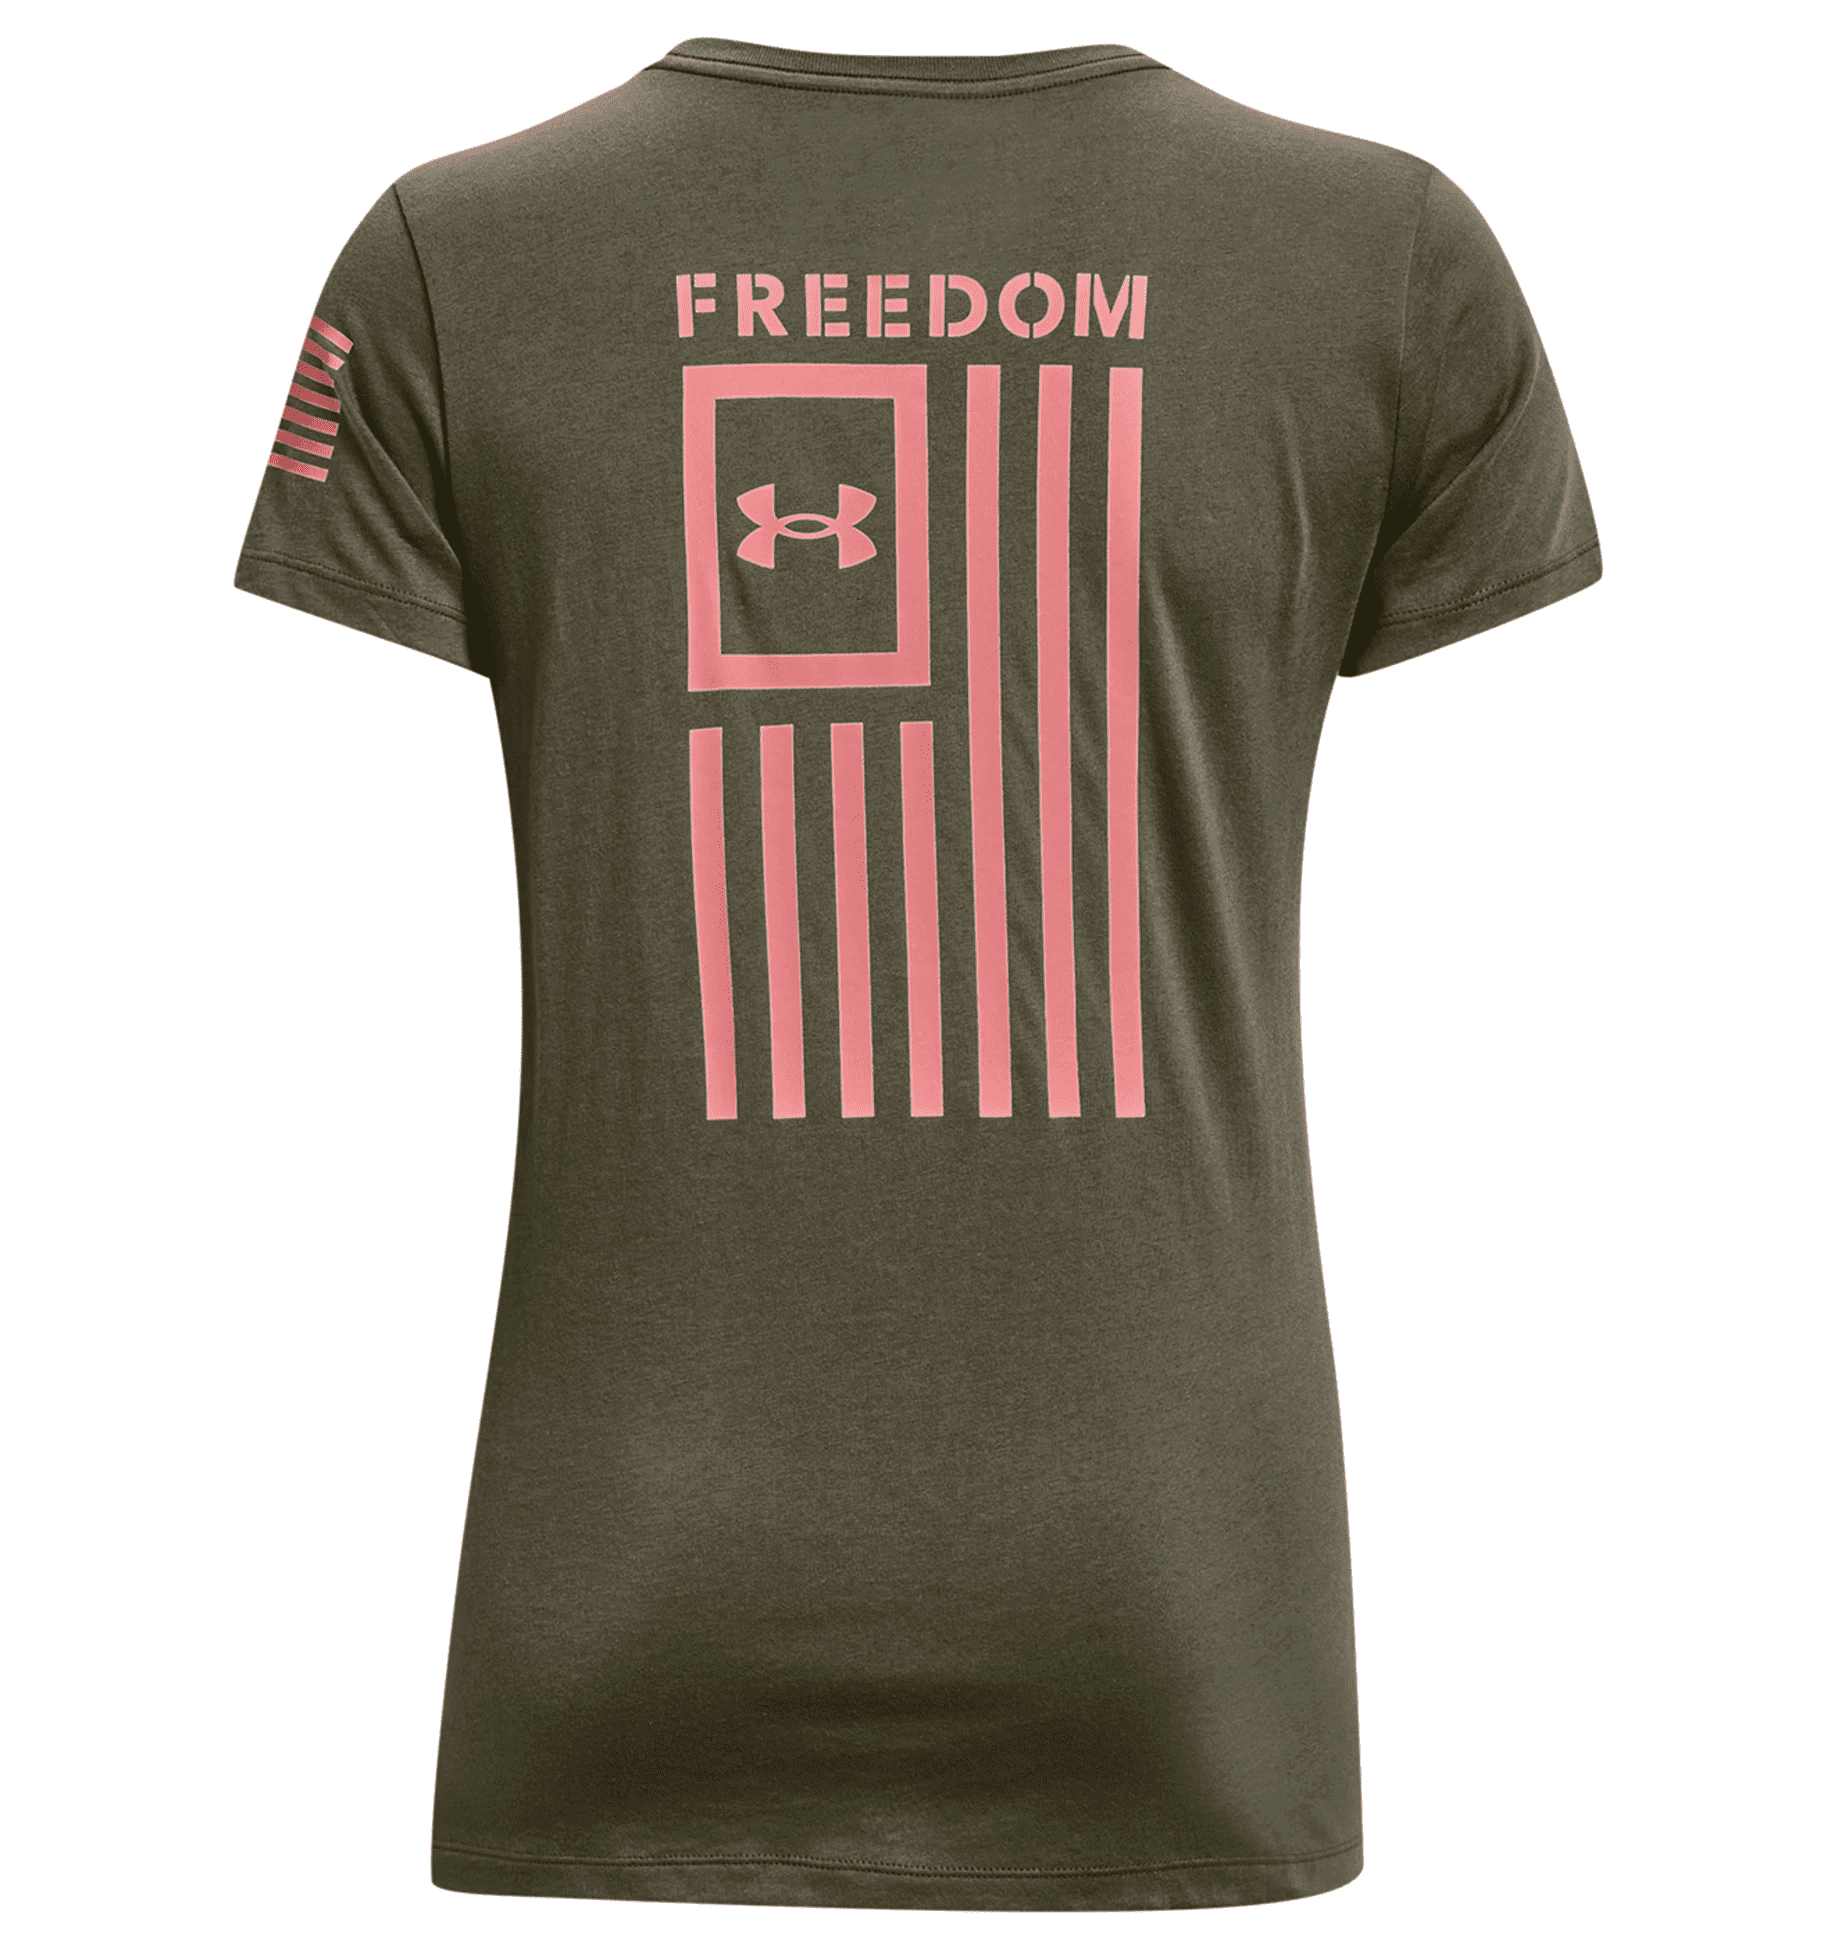 Under Armour Women's UA Freedom Flag T-Shirt 1370814 - Marine OD Green/Pink, 2XL